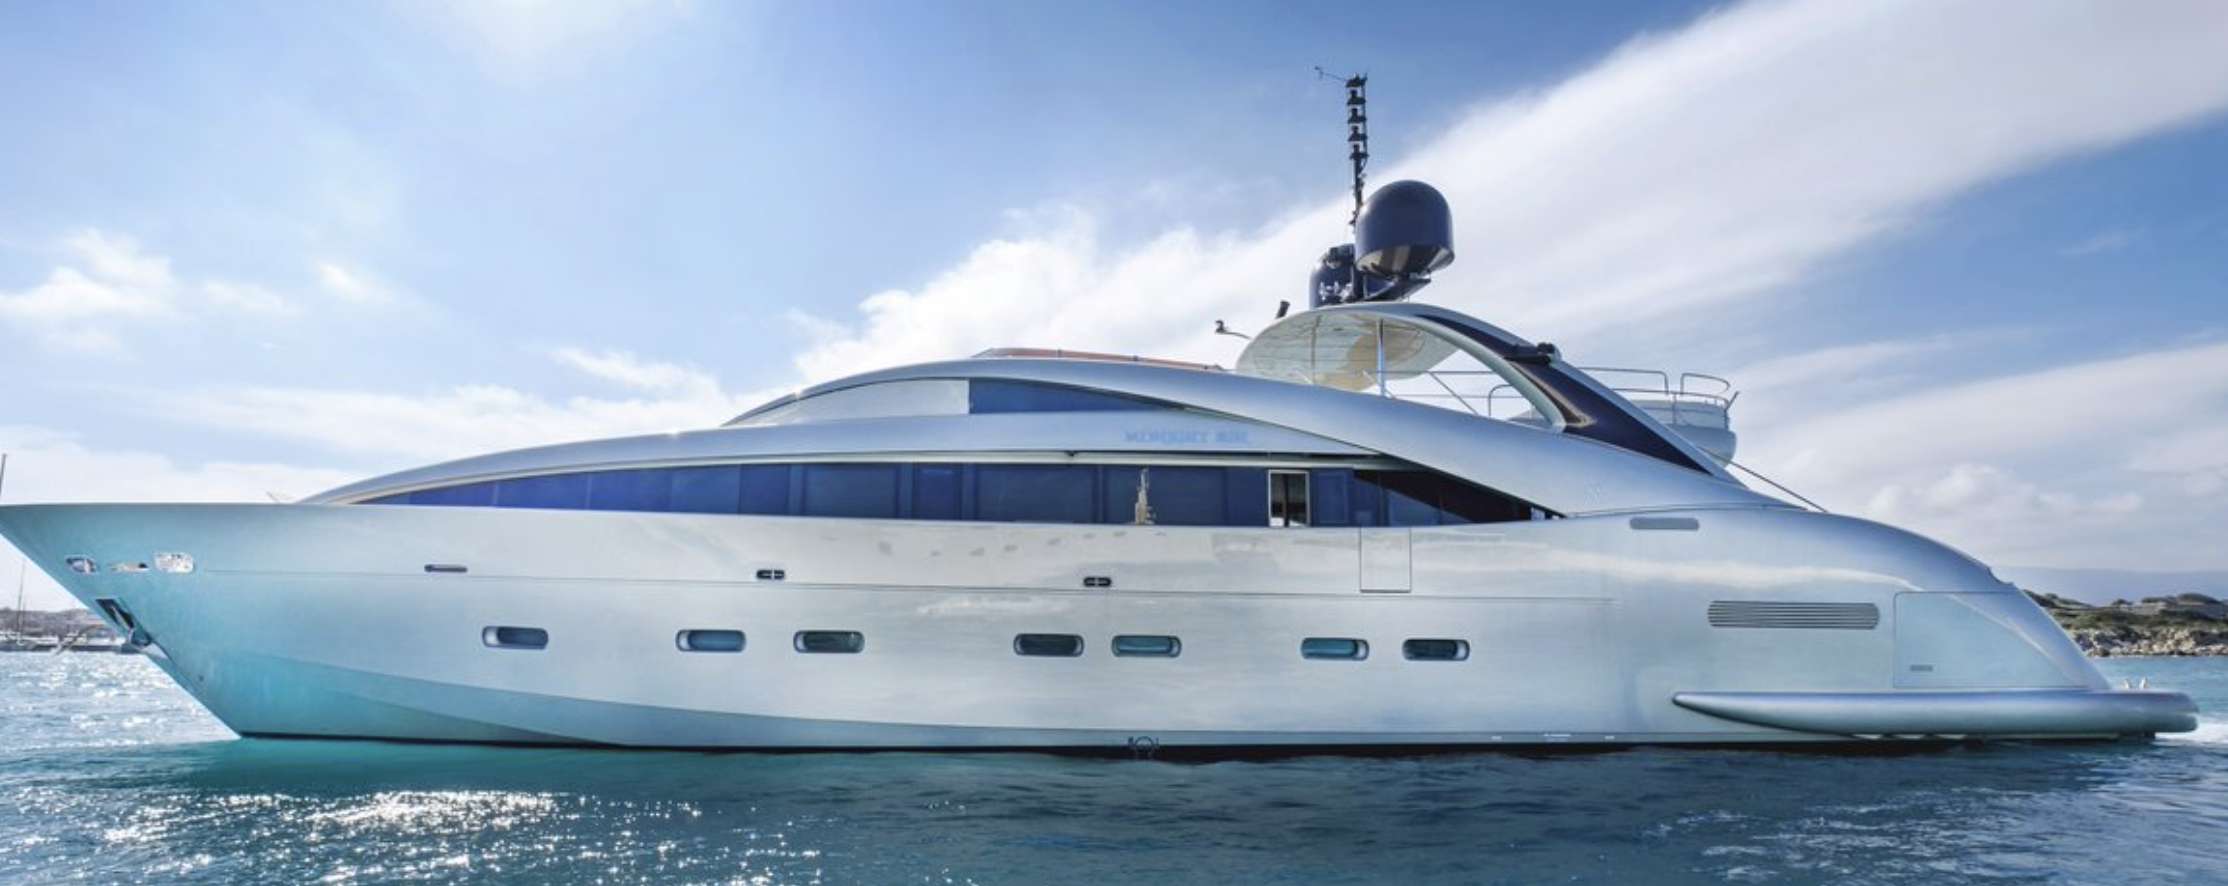 YCM 120 - Yacht Charter Golfo Aranci & Boat hire in Riviera, Corsica, Sardinia, Spain, Balearics, Caribbean 4